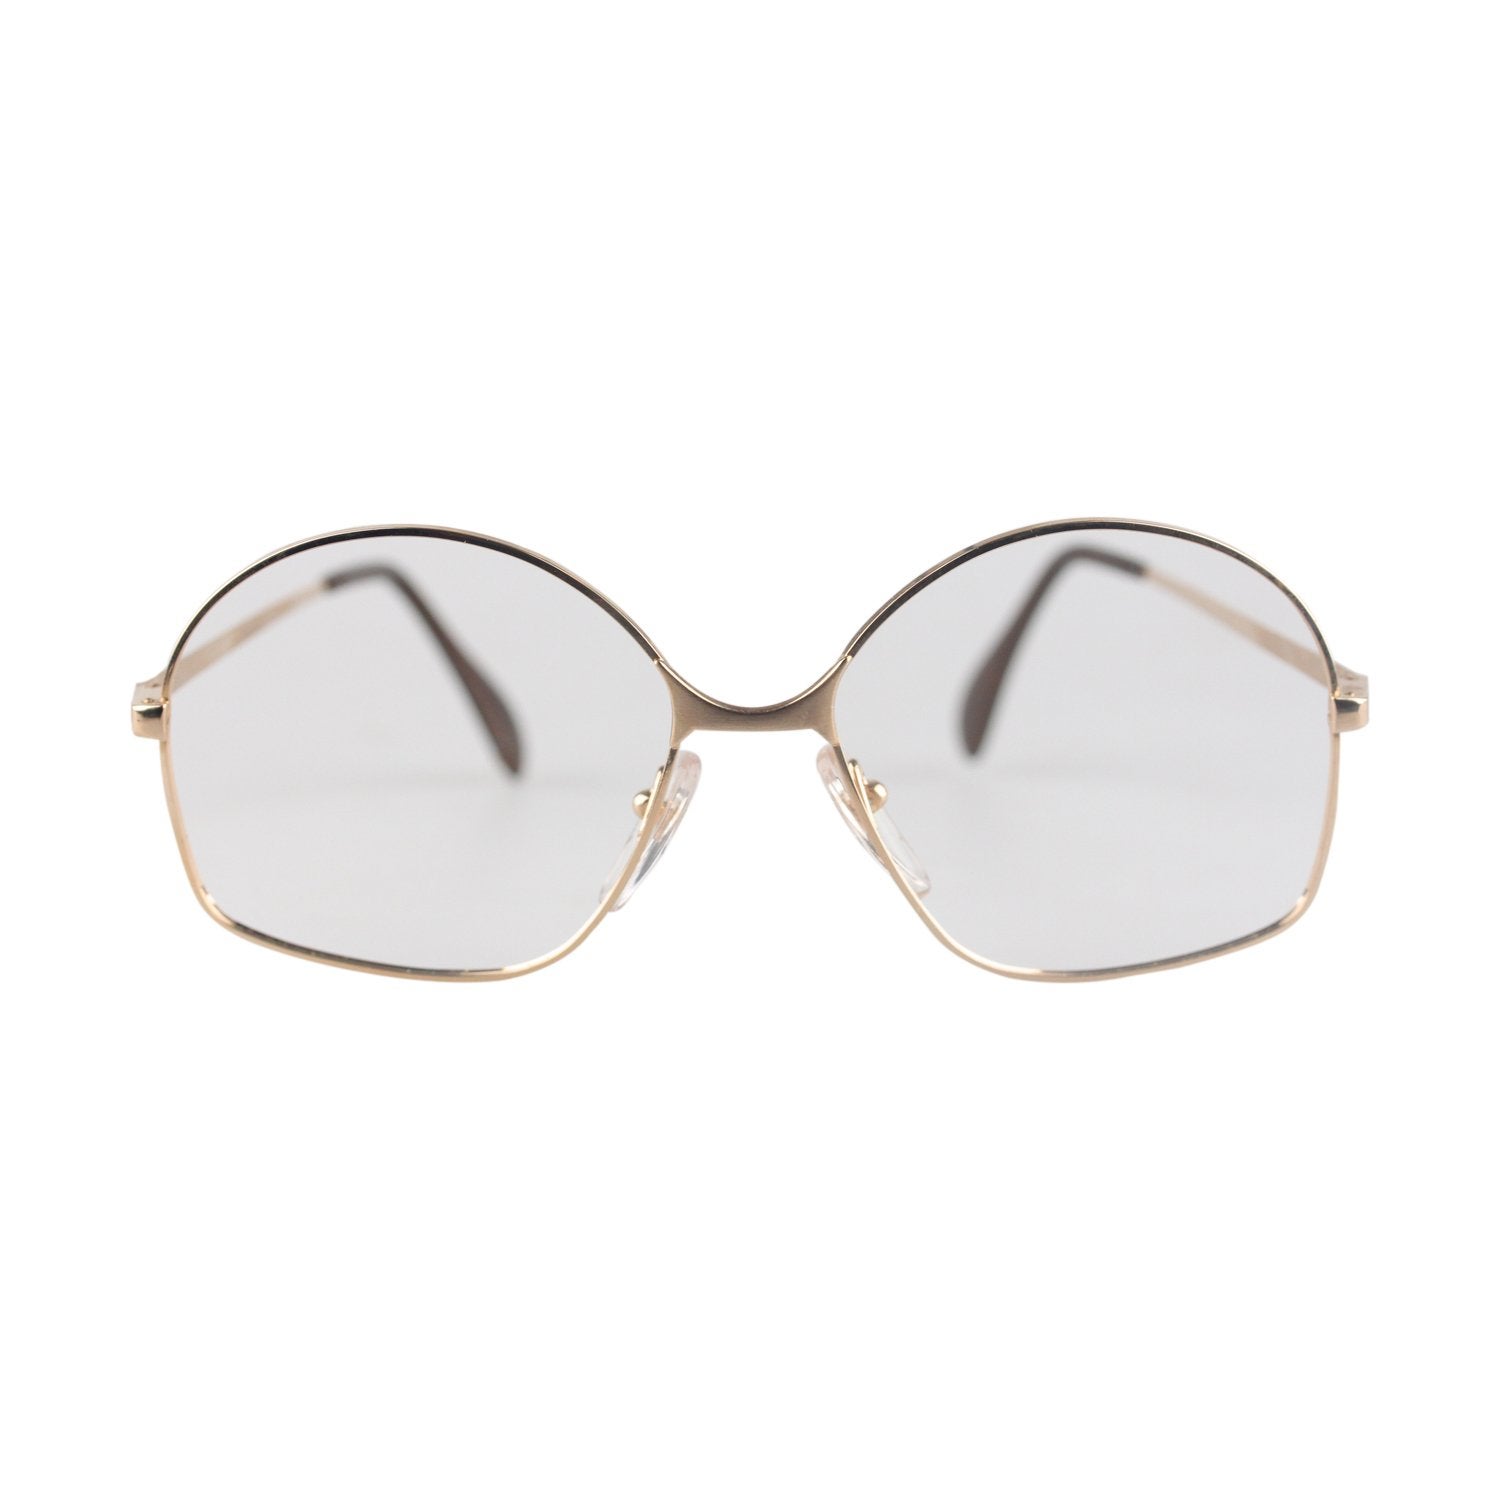 1990 never worn gift frames rare vintage artsy Silver eyeglasses sale mod retro round eyeglasses mint eyeglasses octagon